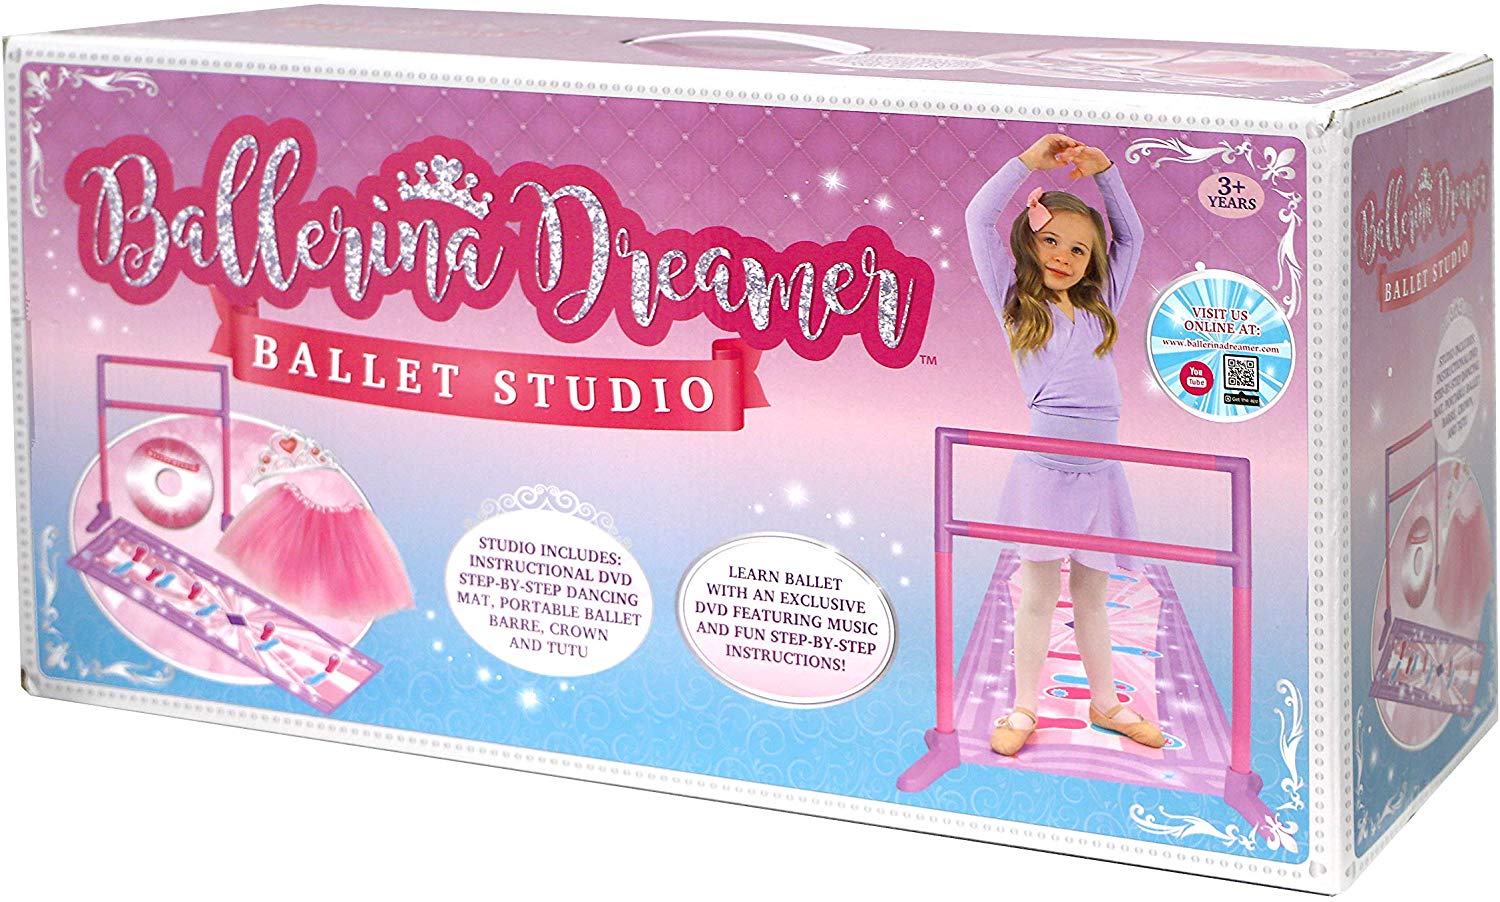 NEW Ballerina Dreamer Ballet Dancing Mat Studio Portable Barre Birthday Gift 